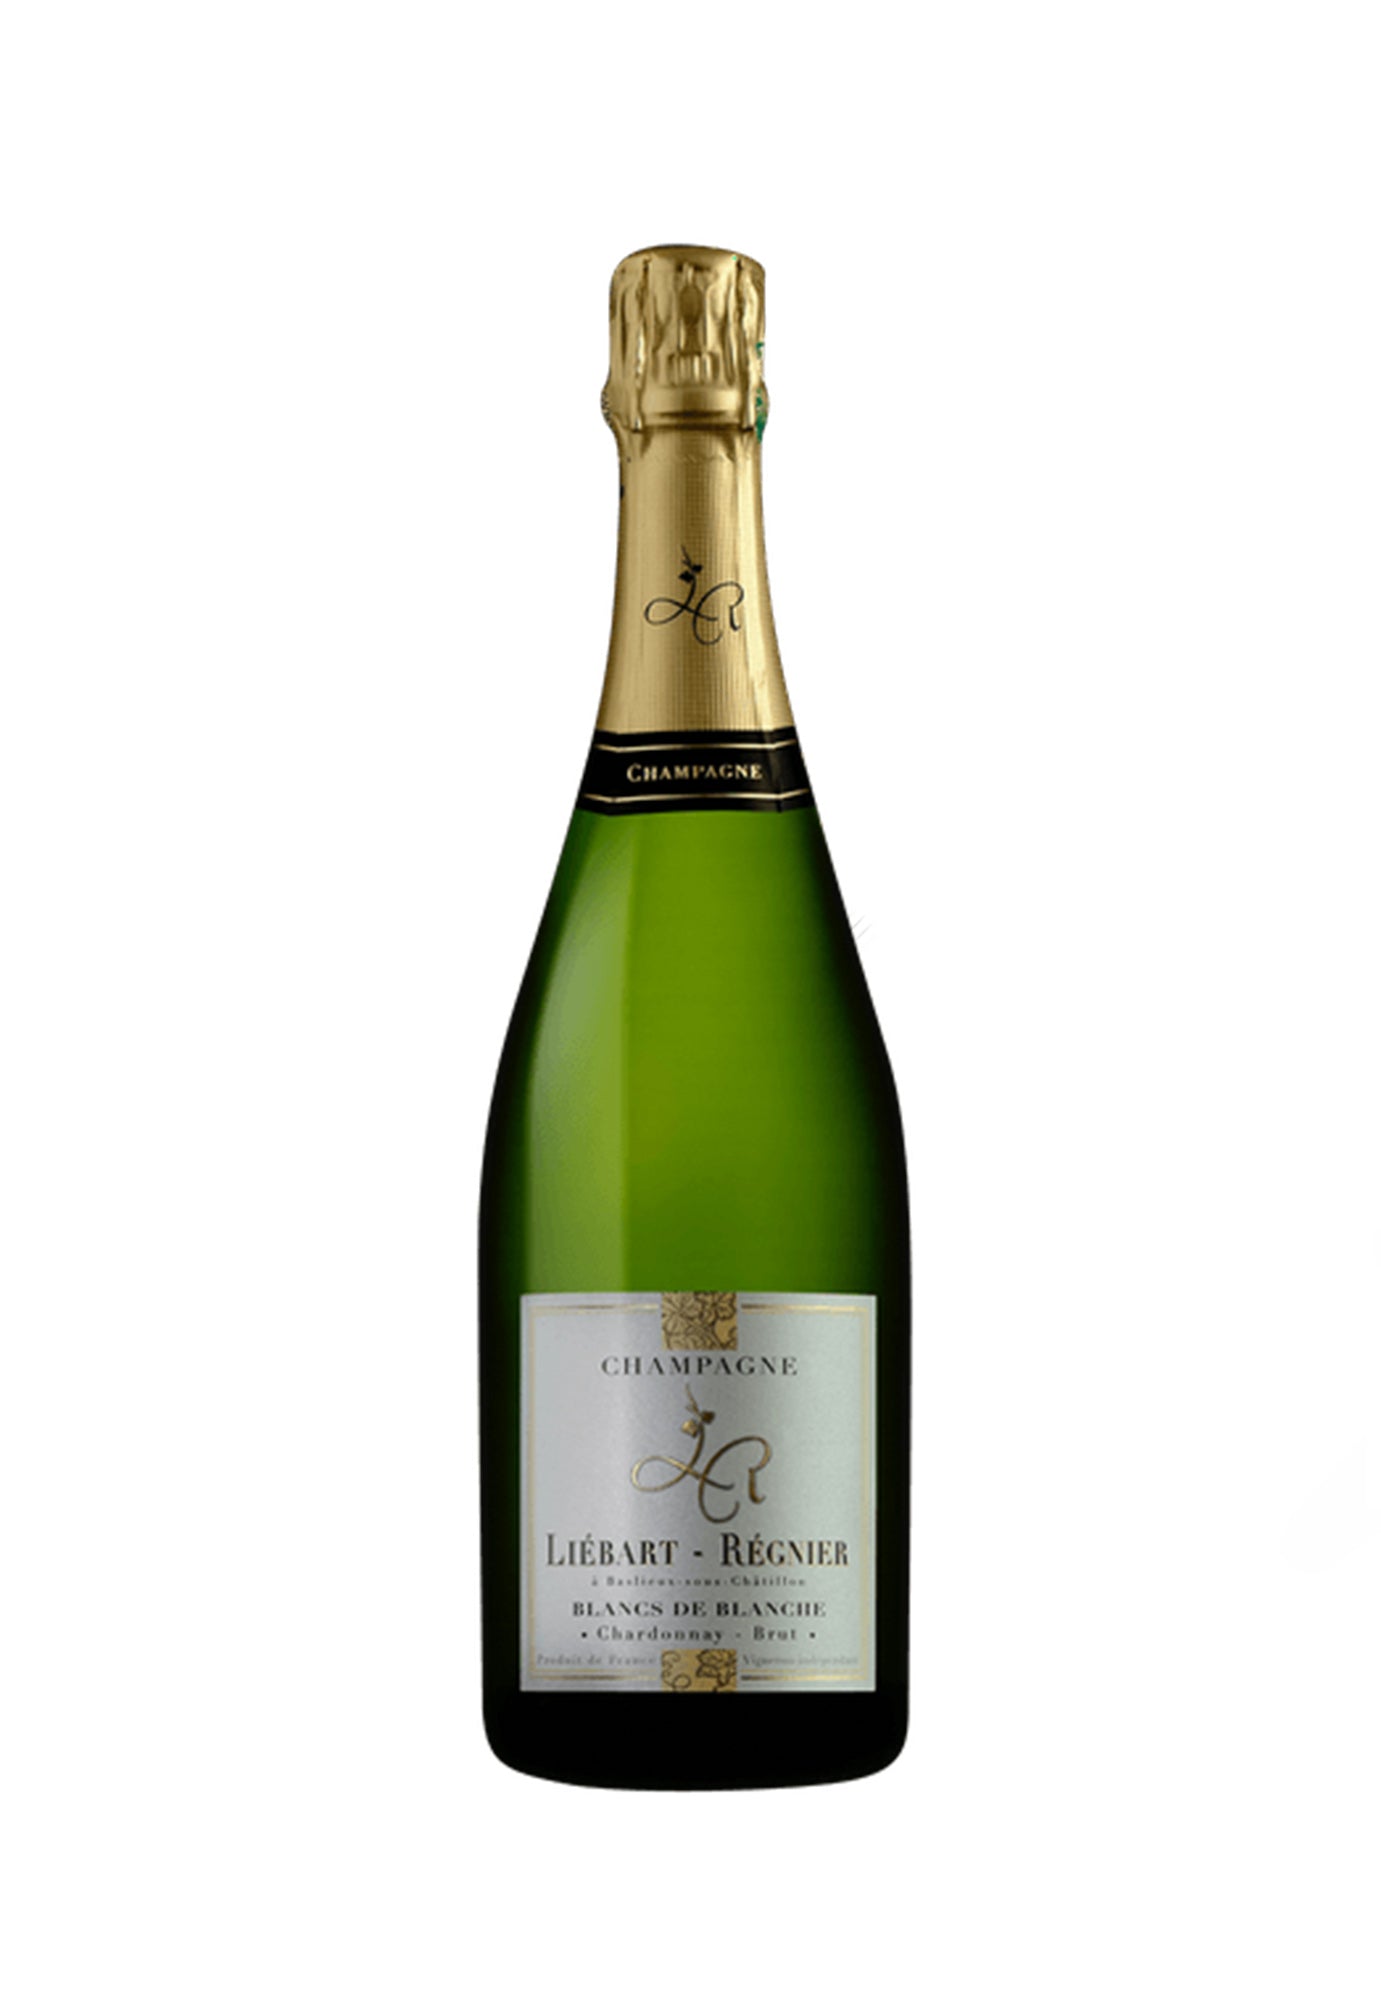 Liebart Regnier Chardonnay Brut Blancs de Blanche (NV)